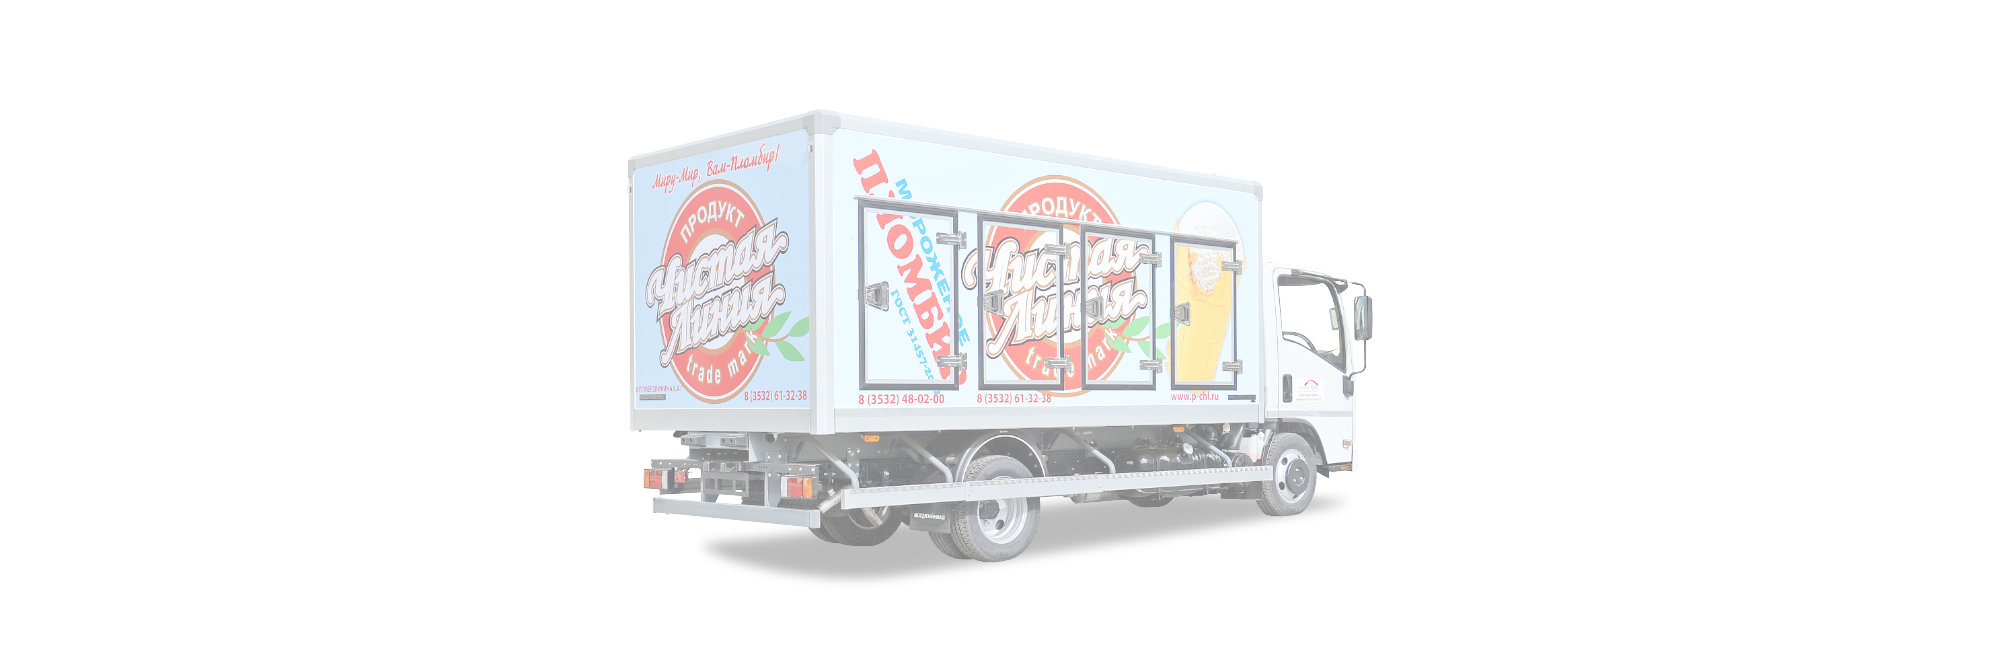 Decopan Commercial Vehicle FRP laminate gallery ice cream distribution fleet